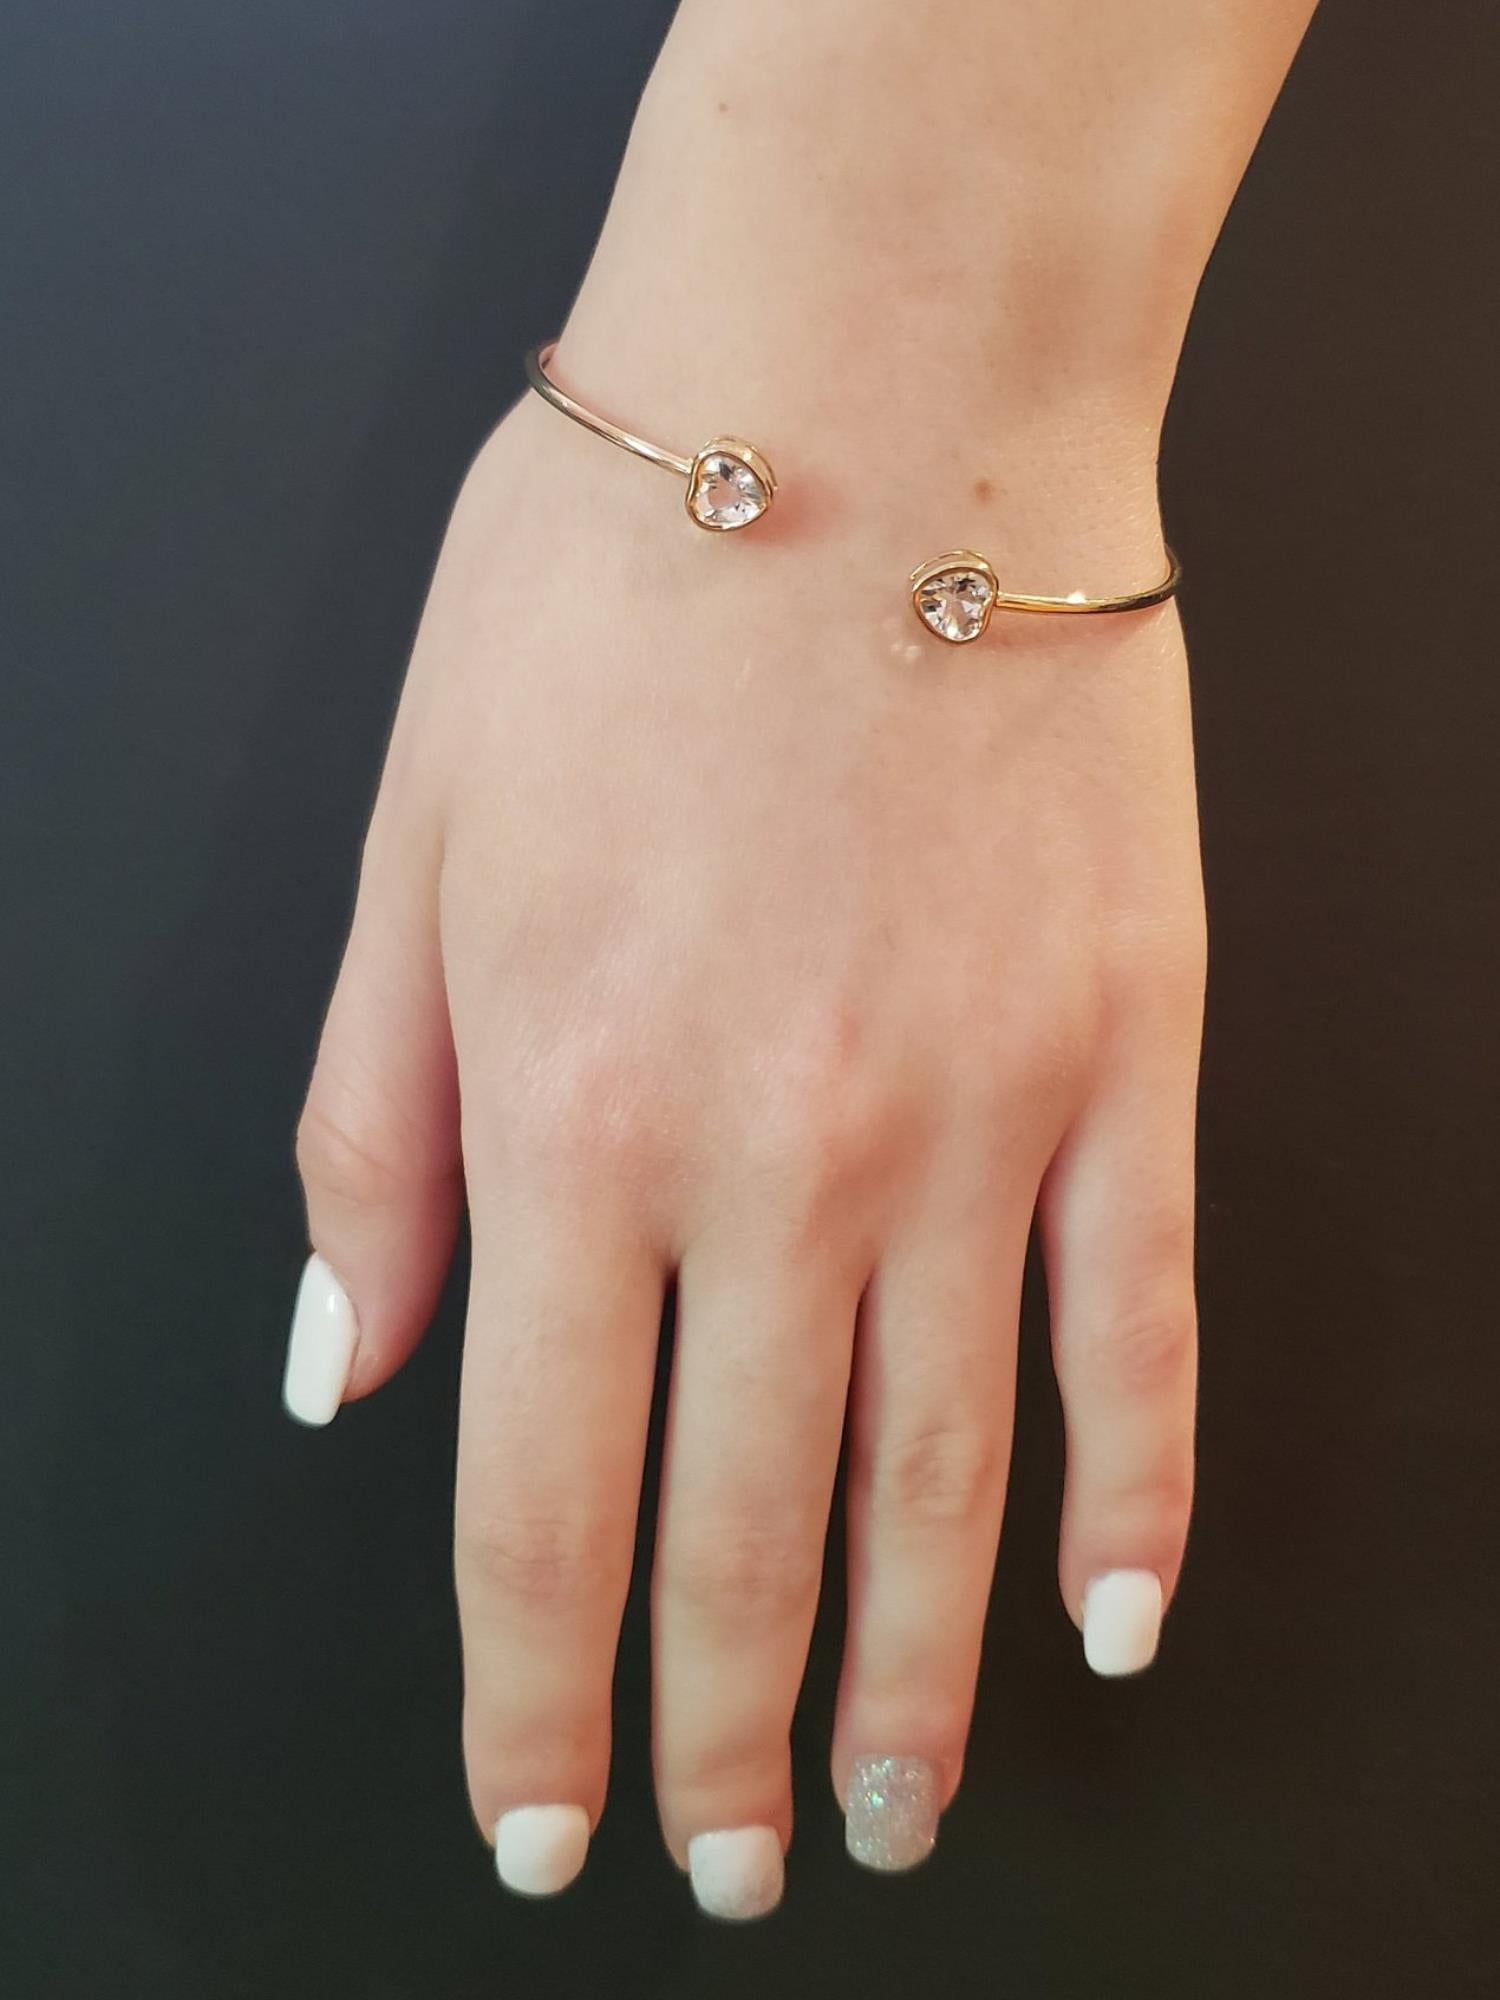 14Kt Gold Genuine Aquamarine Heart Bezel Bangle Bracelet